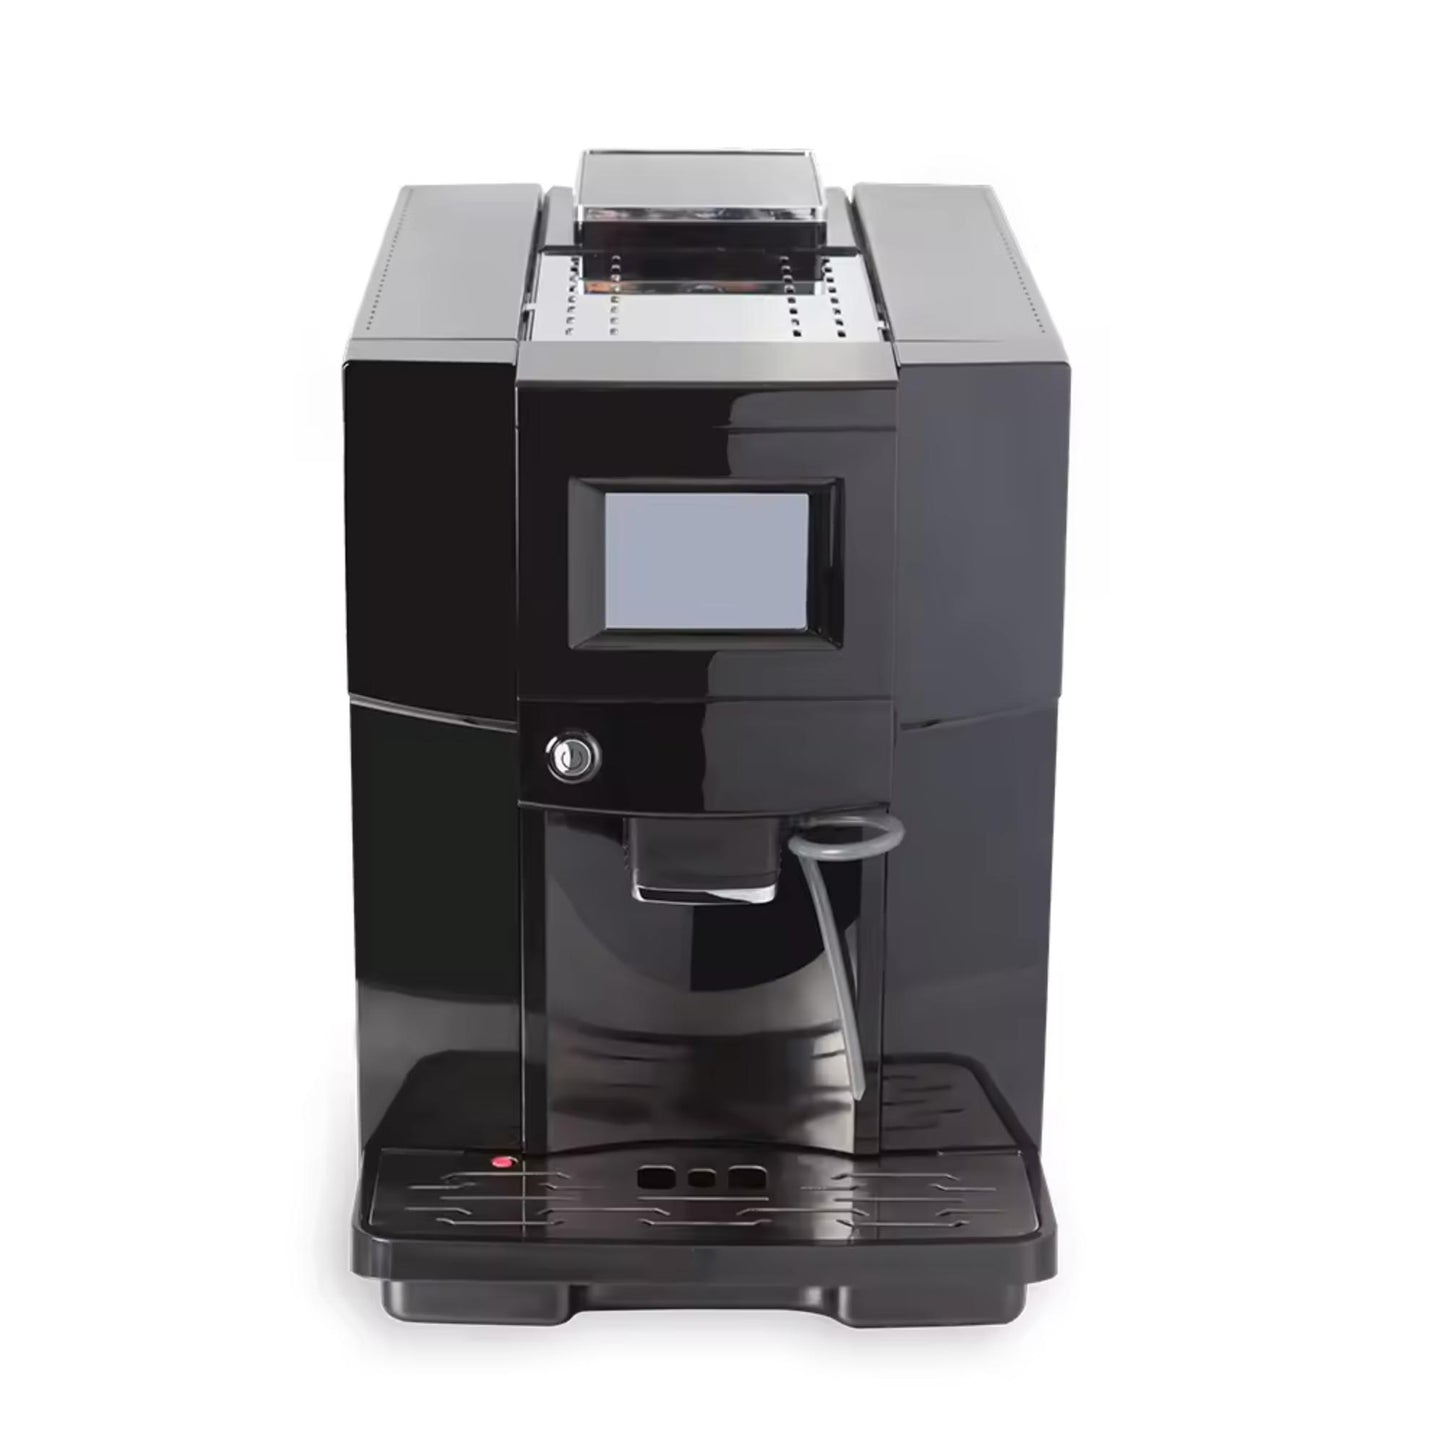 Colet Q006 Automatische Kaffeemaschine: Automatische Kaffeemaschine mit mehreren Kaffeesorten. | Blue Chilli Electronics.